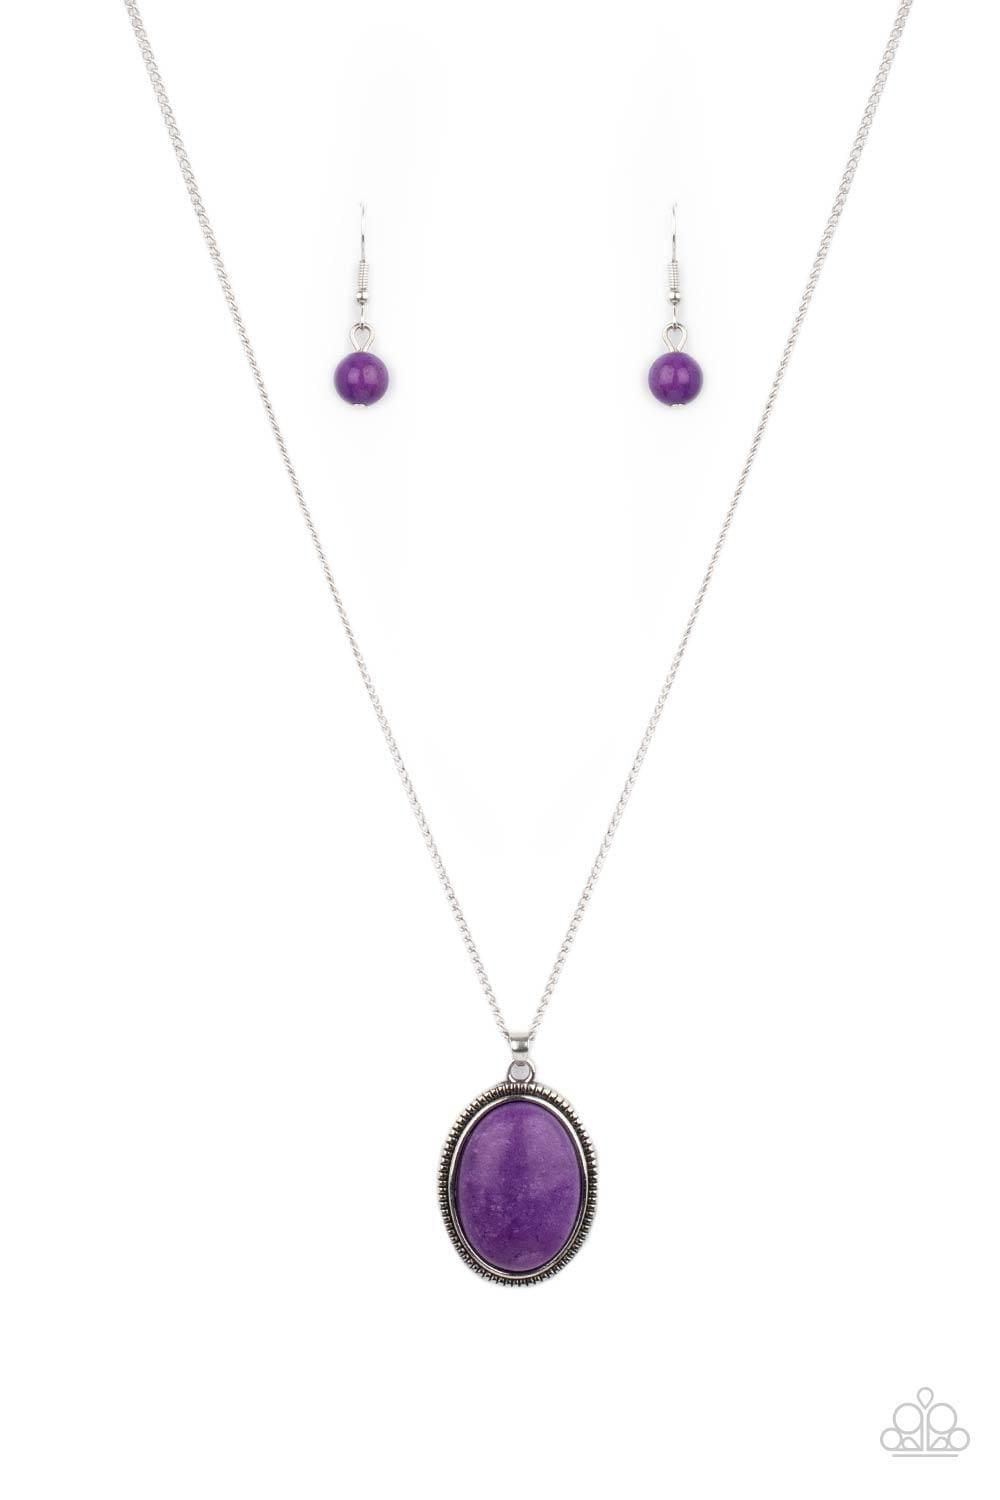 Paparazzi Accessories - Tranquil Talisman - Purple Necklace - Bling by JessieK